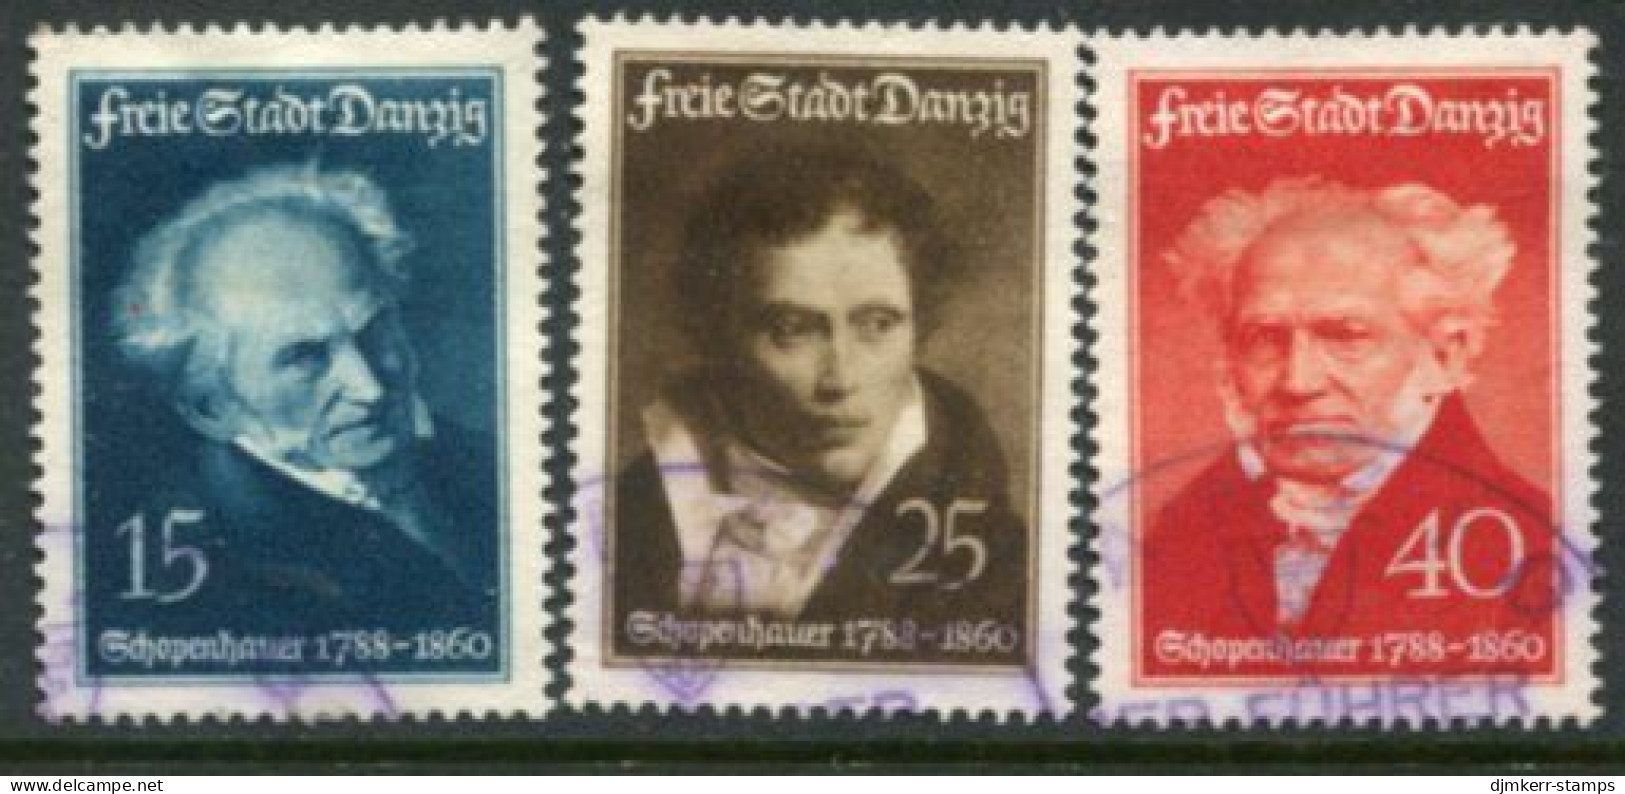 DANZIG 1938 Schopenhauer Birth Anniversary Used  Michel 281-83 - Usati